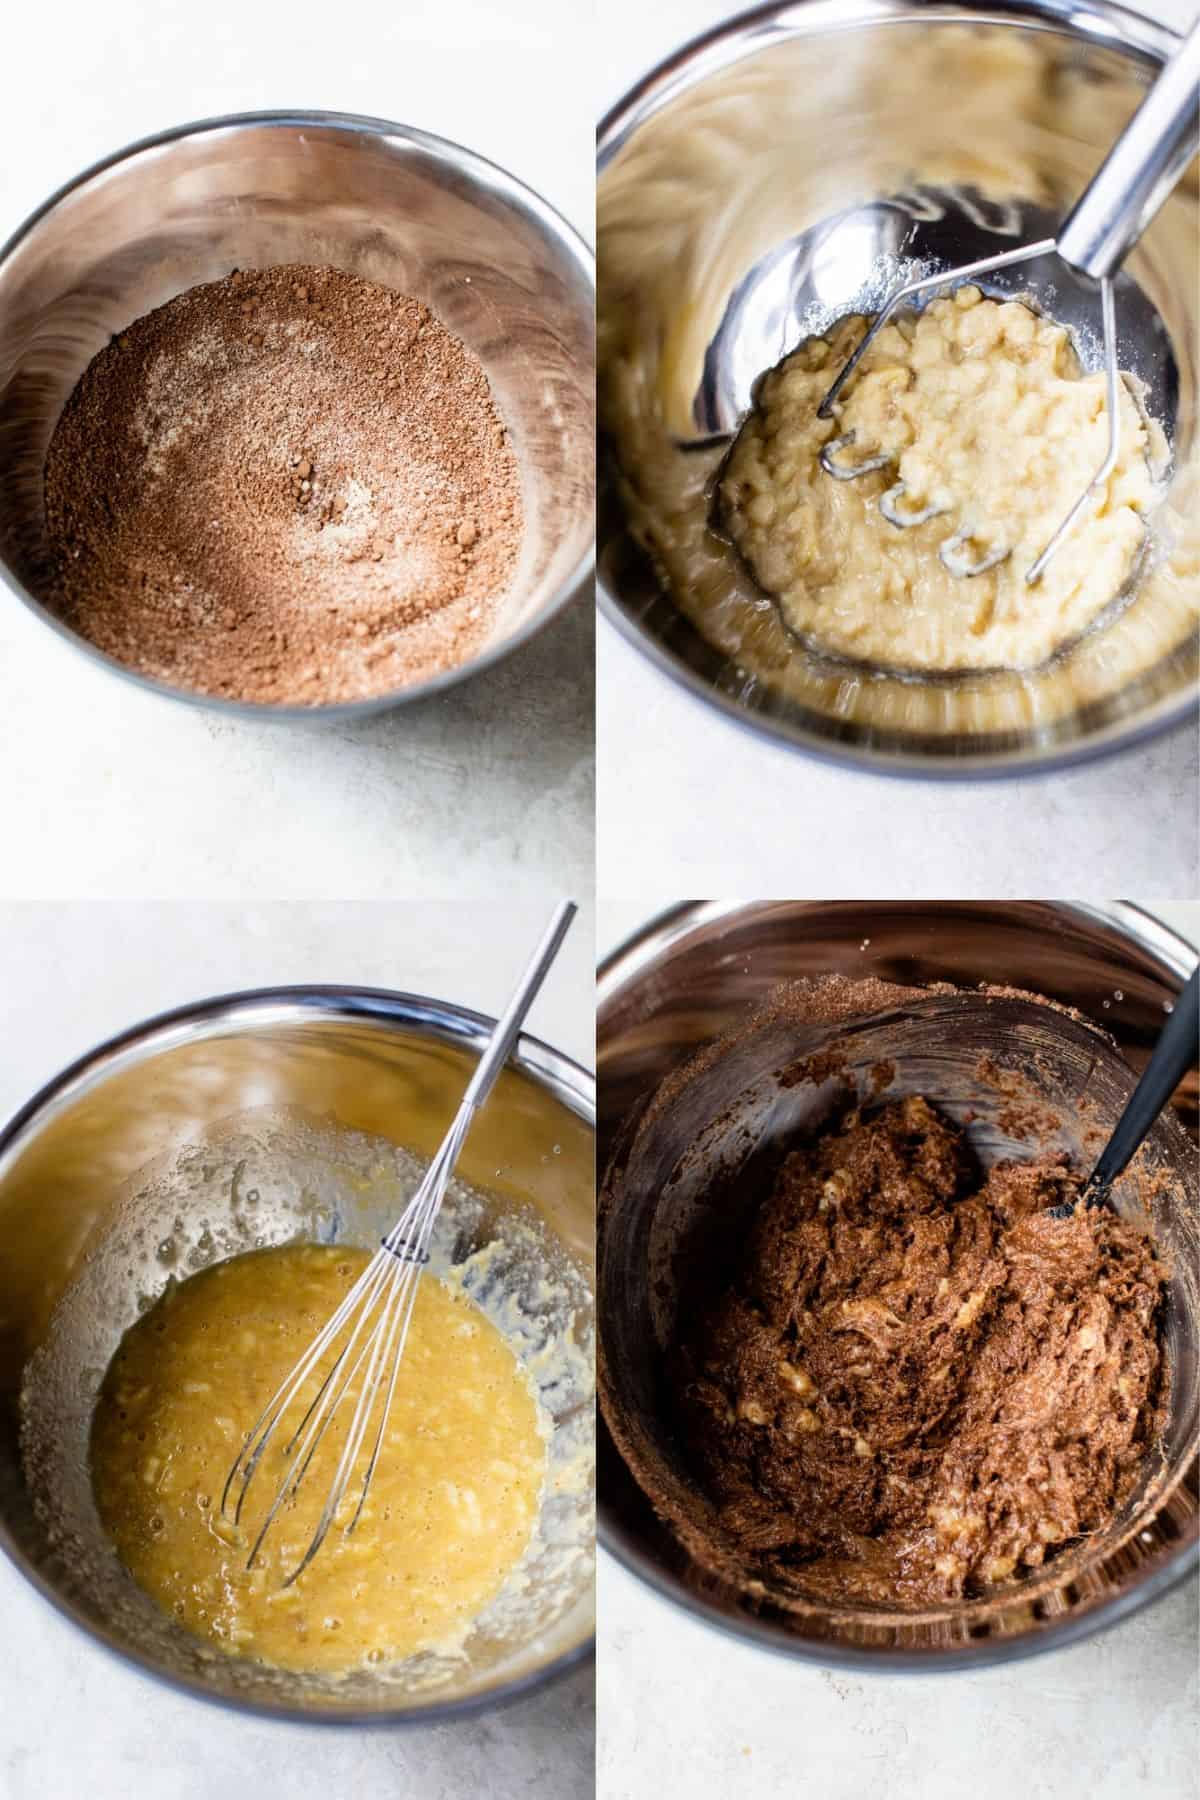 Steps to making chocolate banana bread.